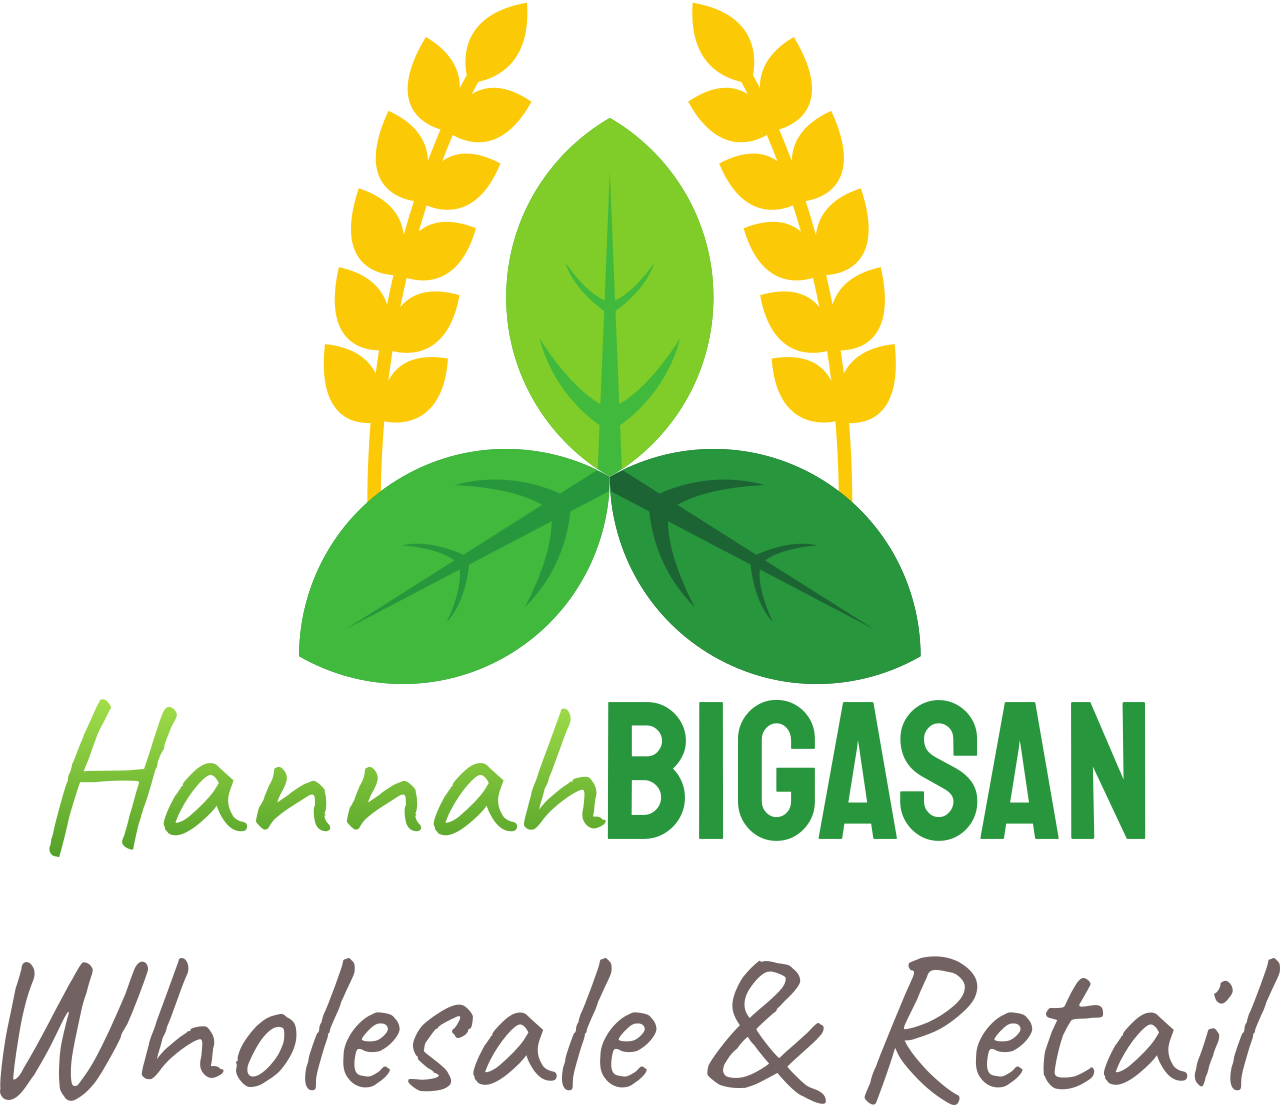 Bigasan's logo